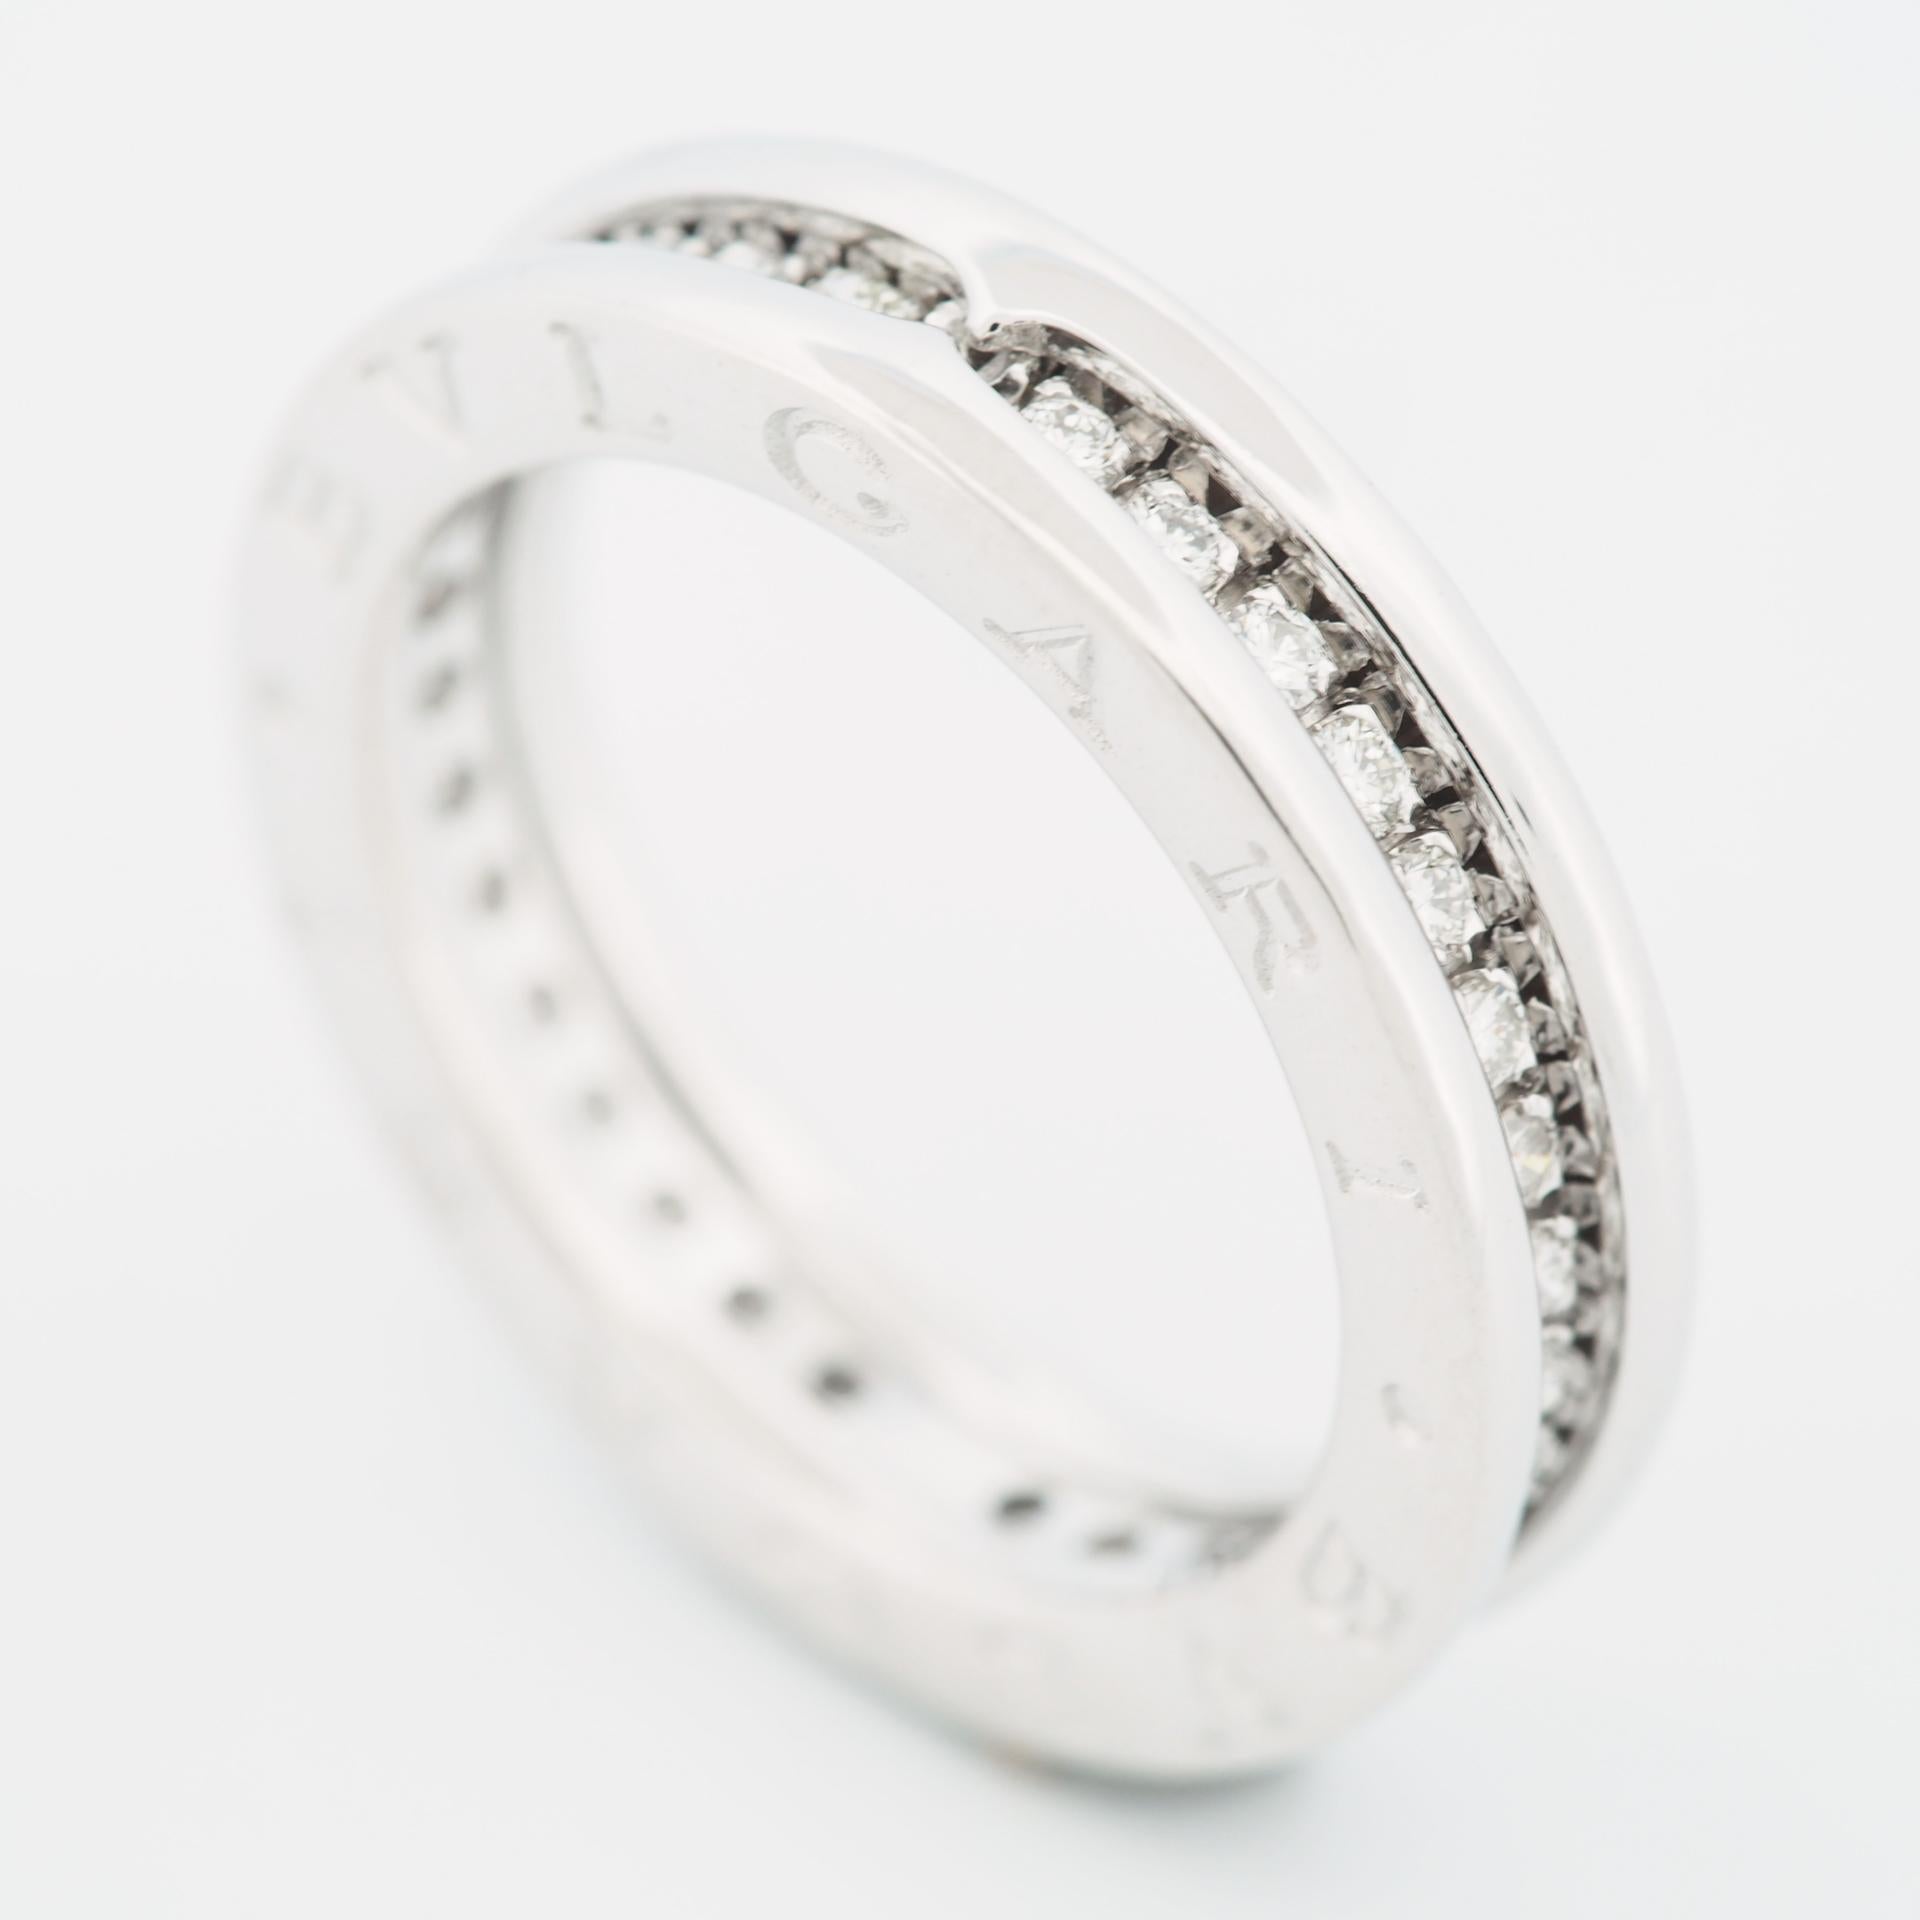 Item: Authentic Bvlgari B Zero 1 Diamonds Ring
Stones: Diamond ( total 0.48ct)
Metal: 18K White Gold
Ring Size: 53 US SIZE 6.75 UK SIZE N
Internal Diameter: 17.20 mm
Measurement: 4.8 mm width
Weight: 7.8 Grams
Condition: Used (repolished)
Retail